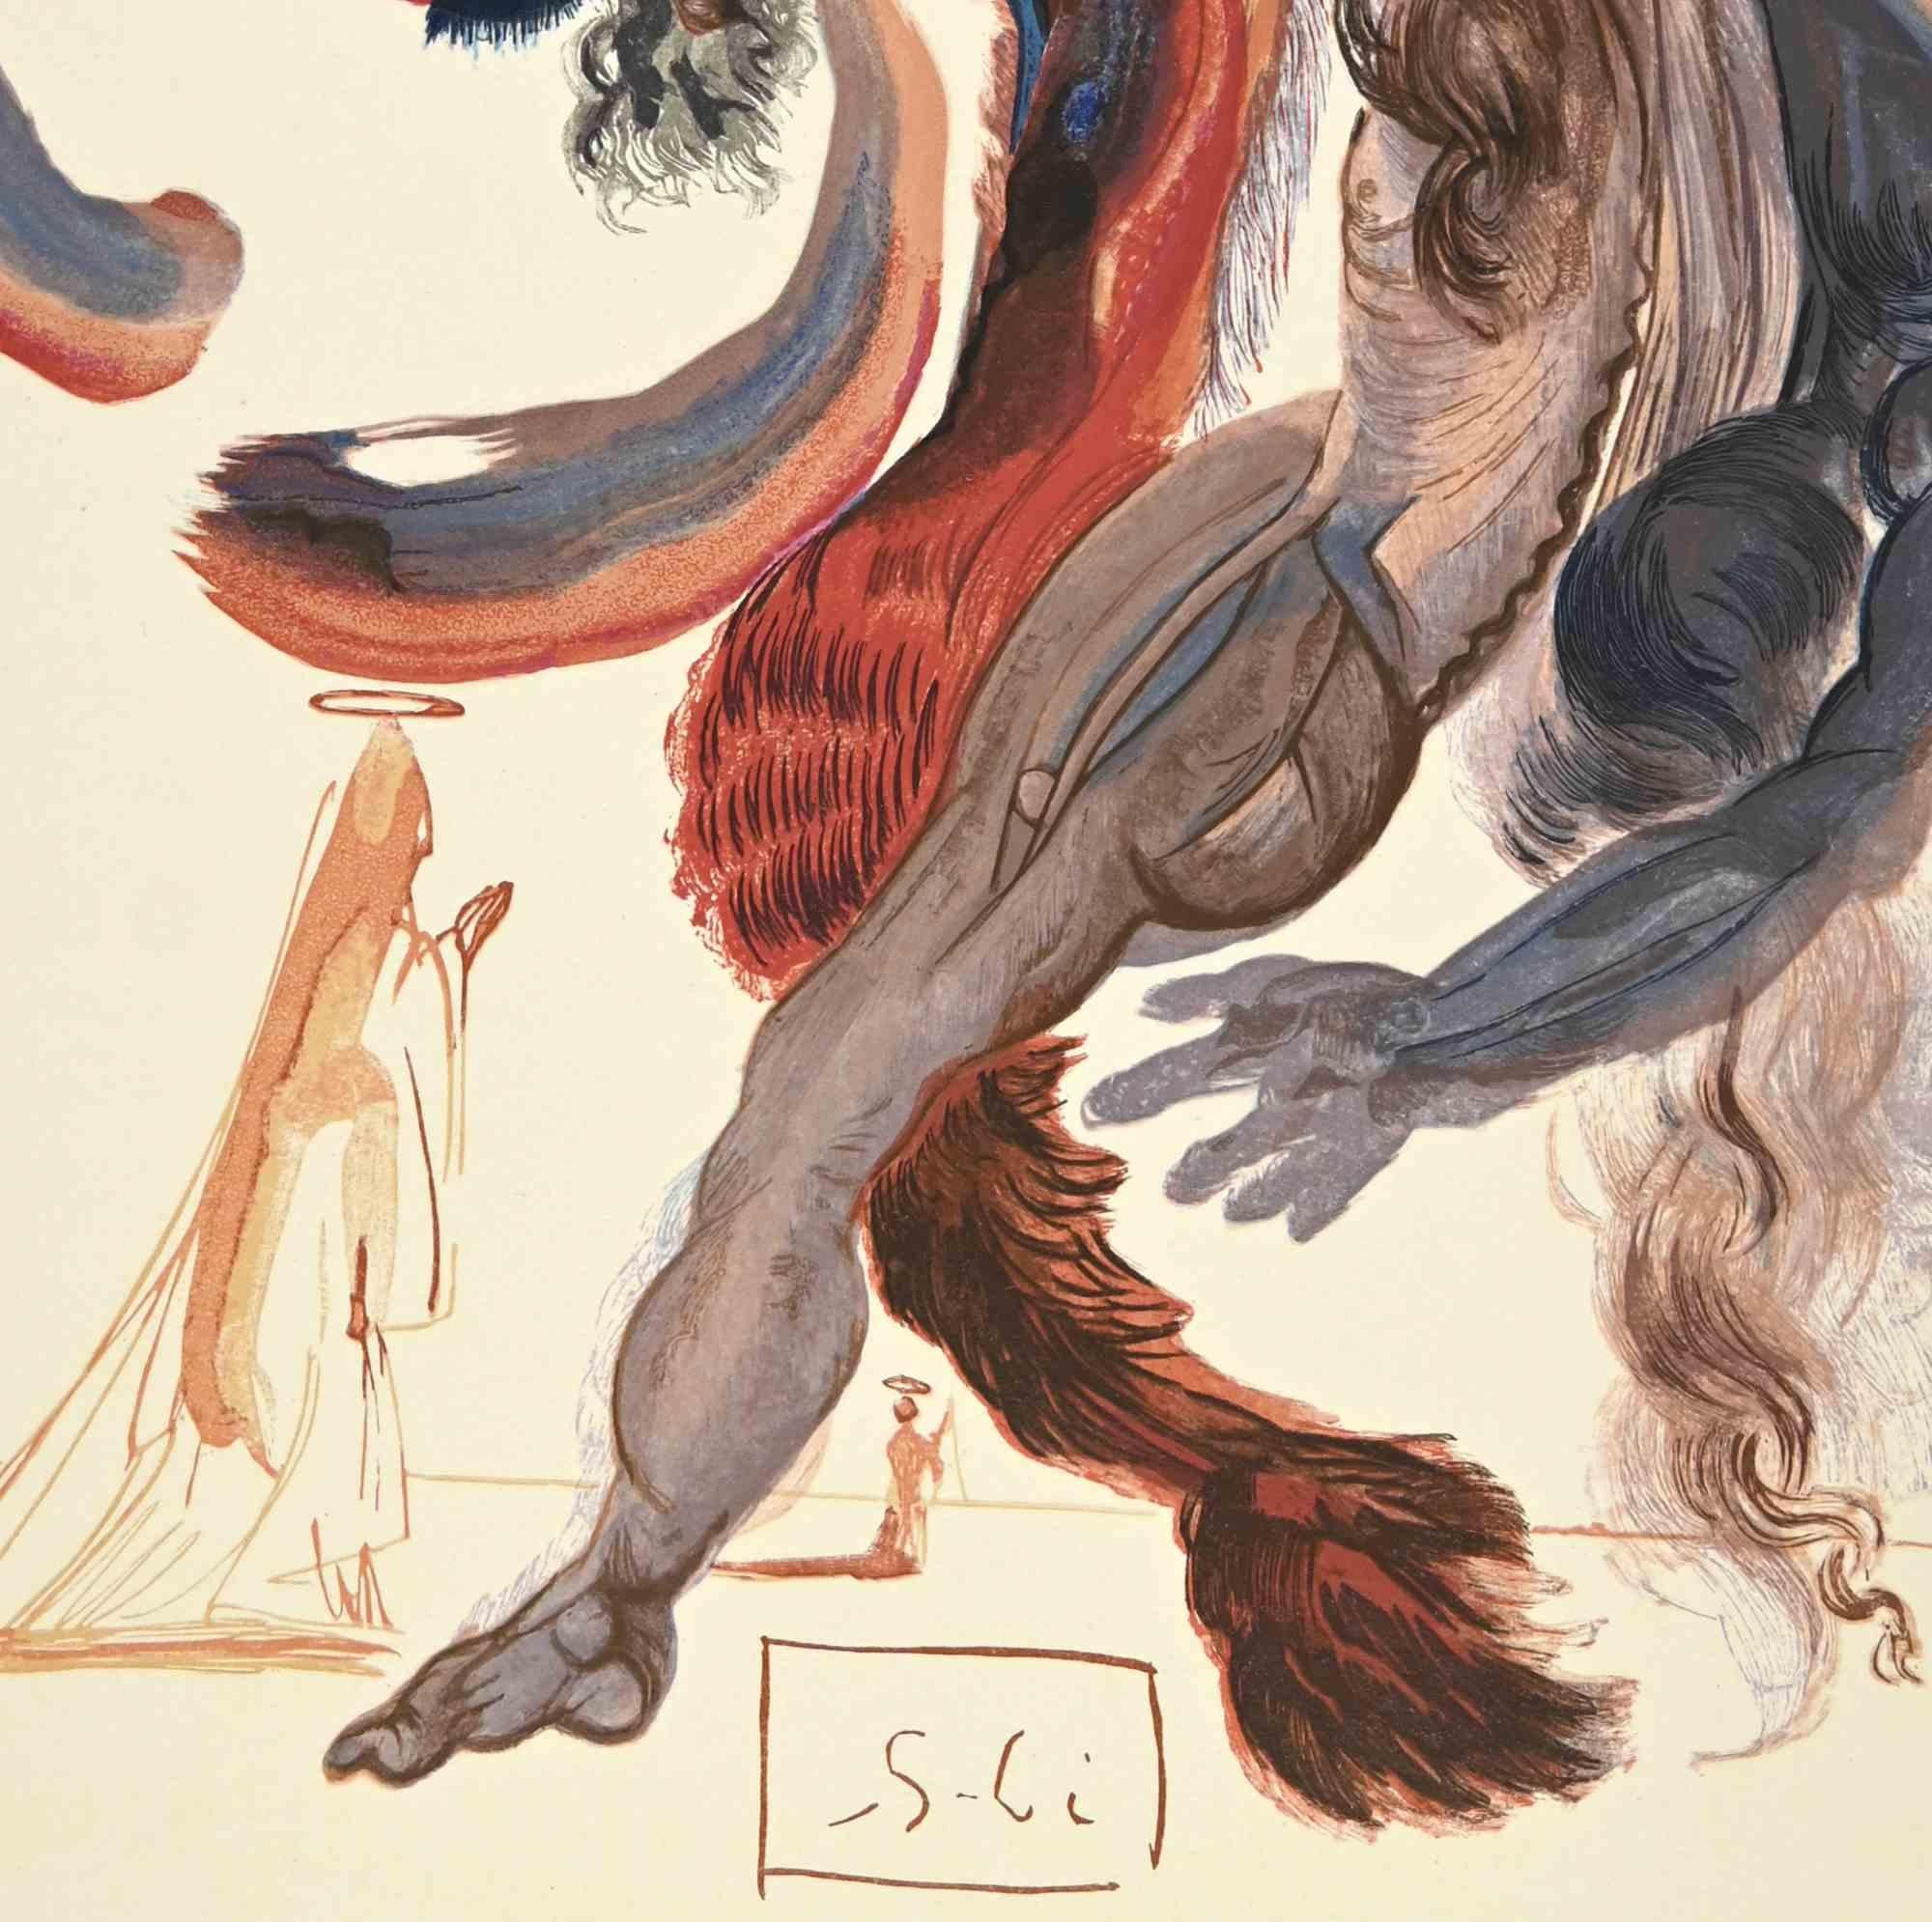 The Slothful - Woodcut - 1963 - Print by Salvador Dalí